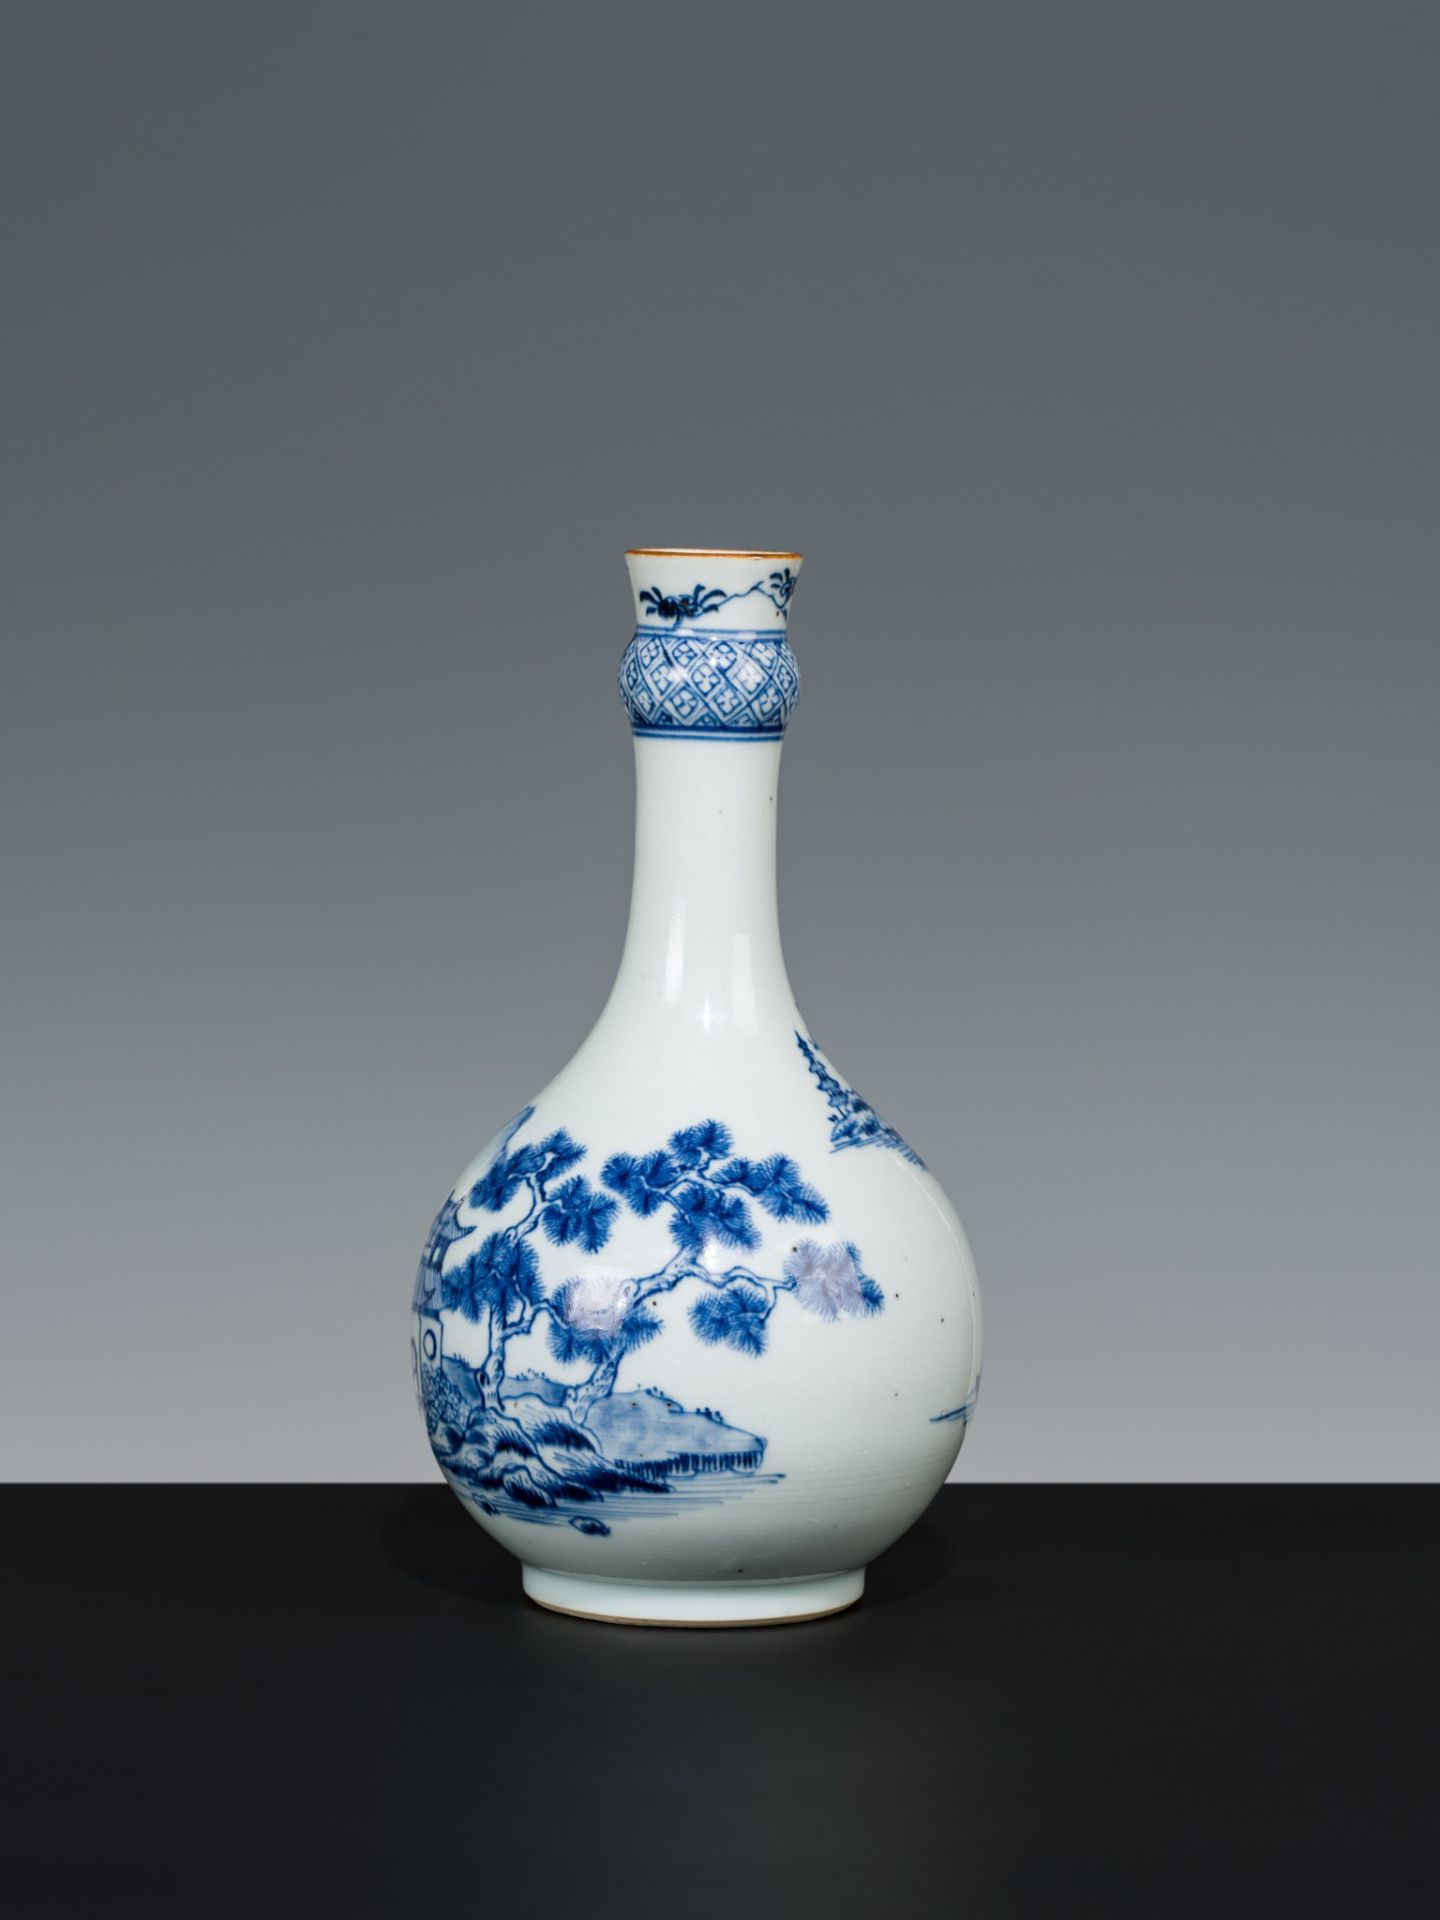 A BLUE AND WHITE PORCELAIN BOTTLE VASE, CHINA, 18TH CENTURY - Image 5 of 8